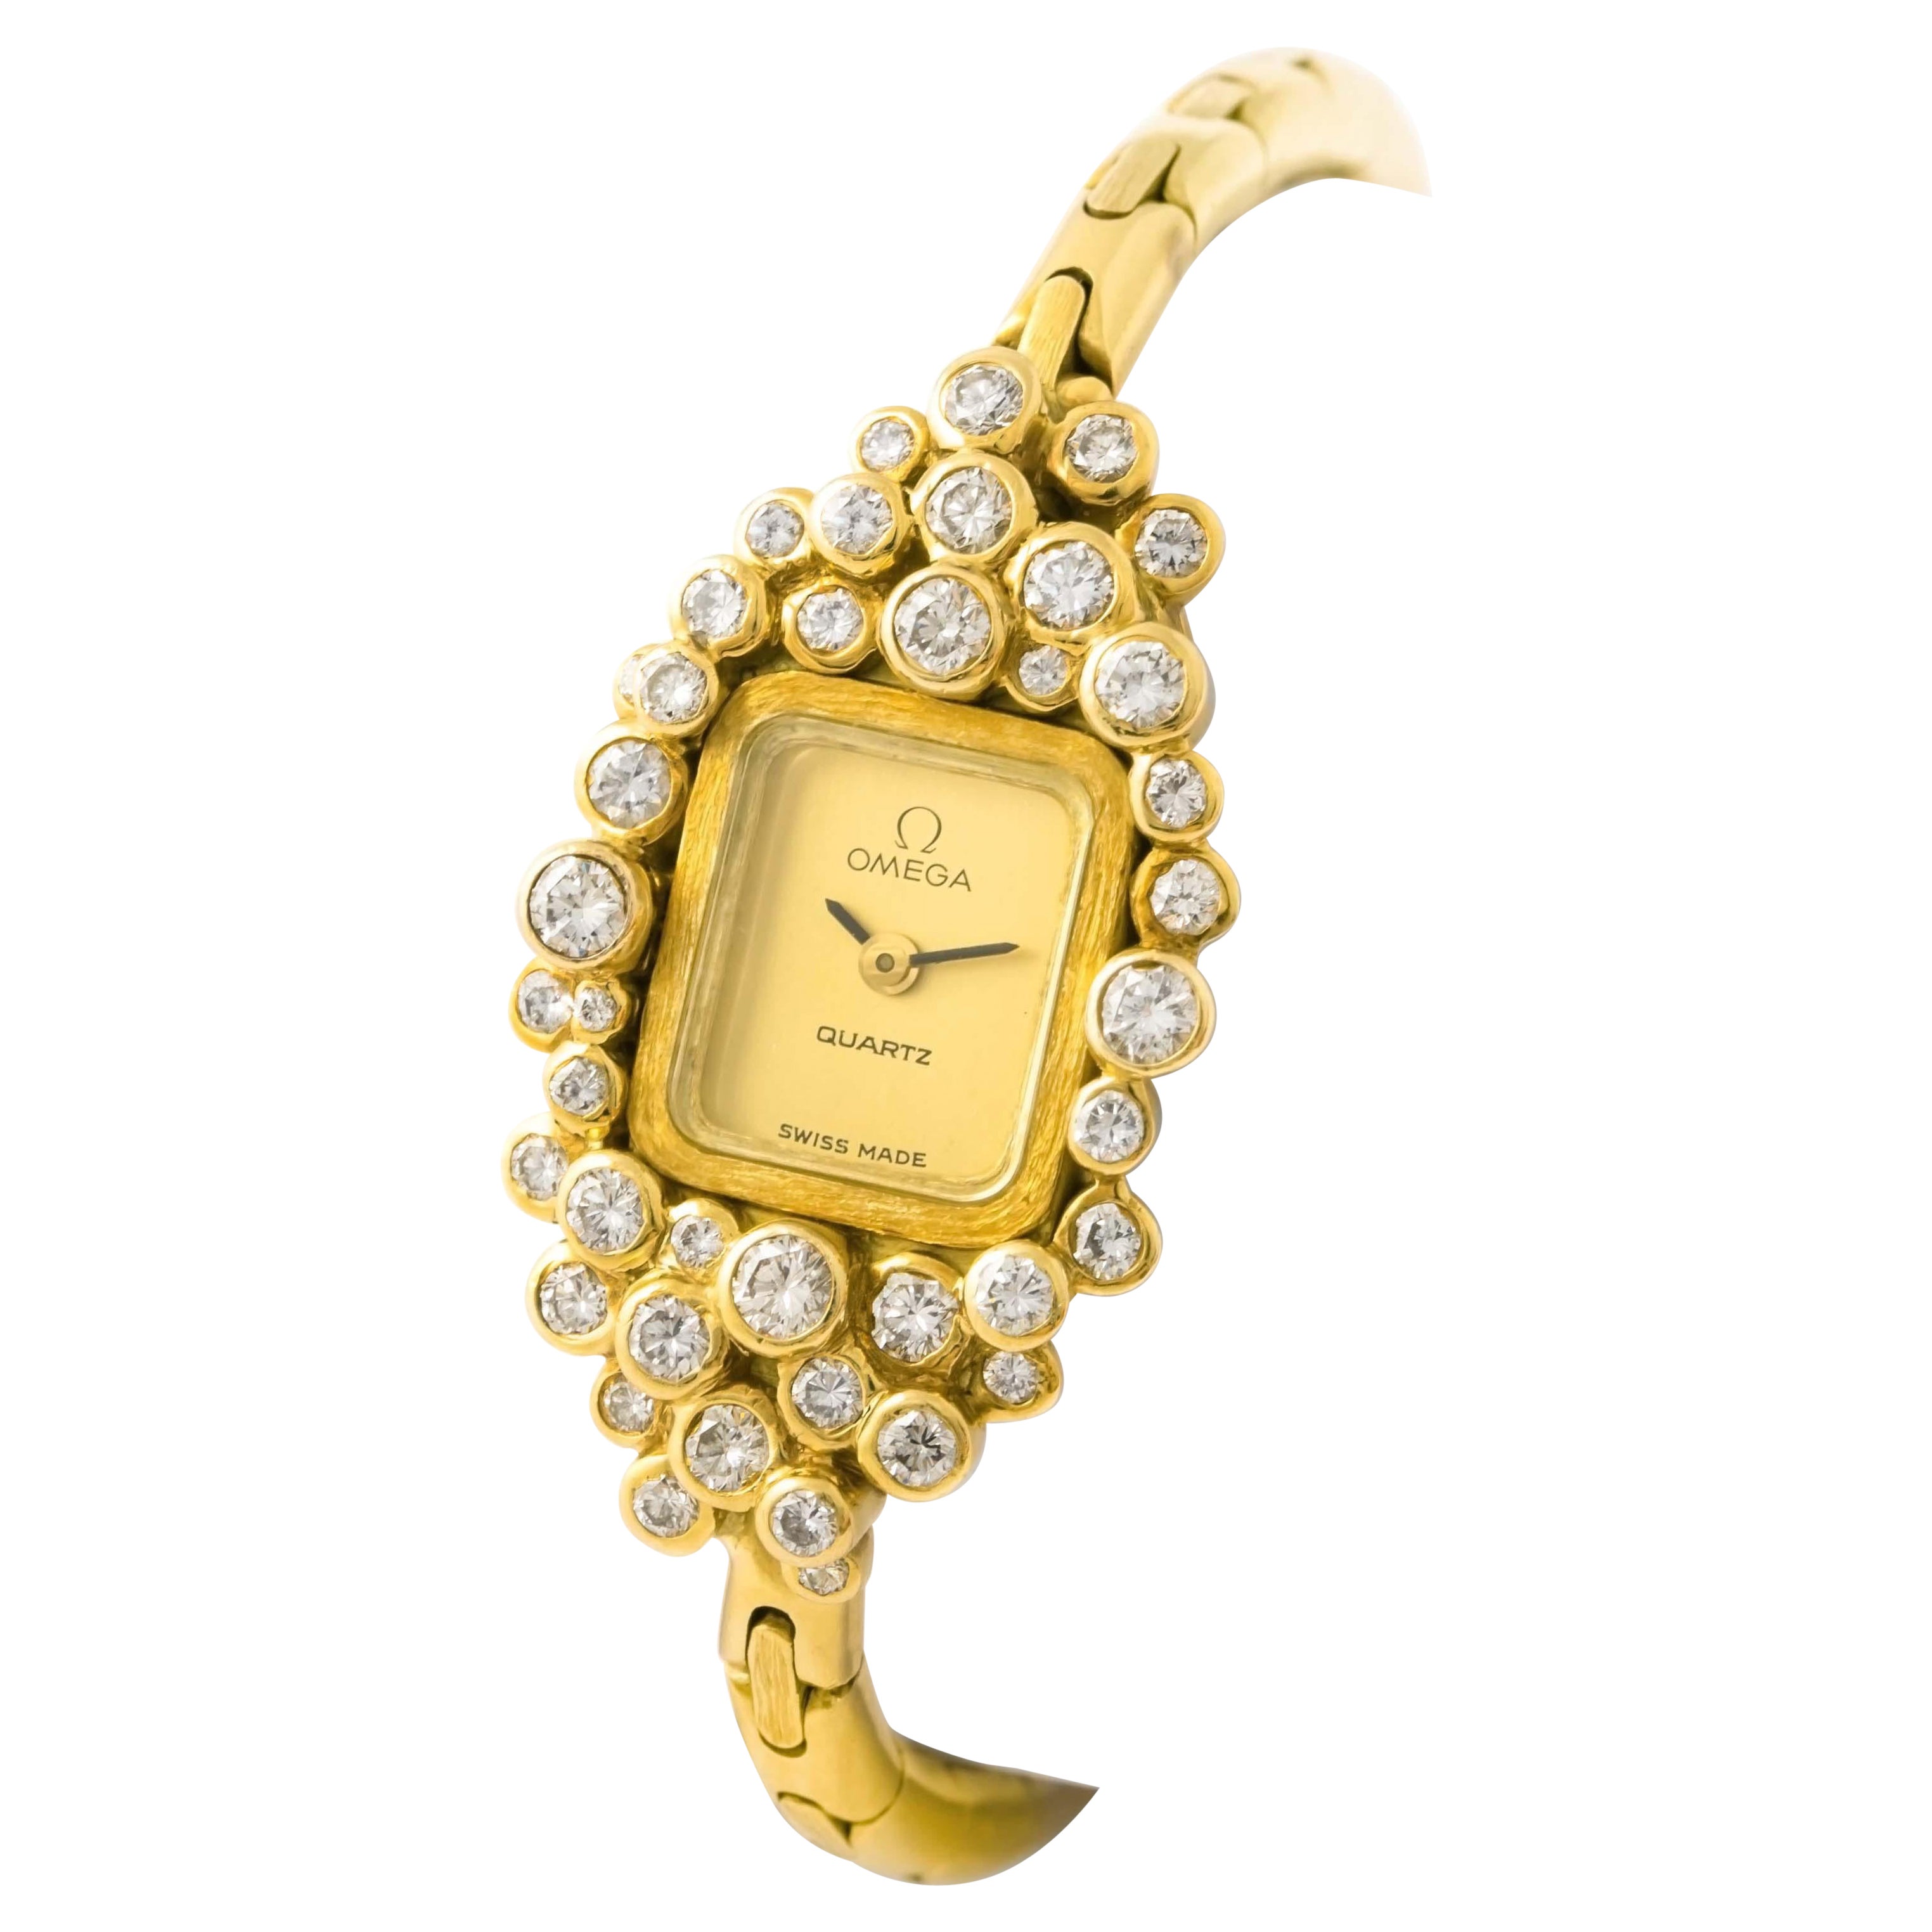 Omega Diamant Gelbgold 18K einzigartige Armbanduhr 1970er Jahre